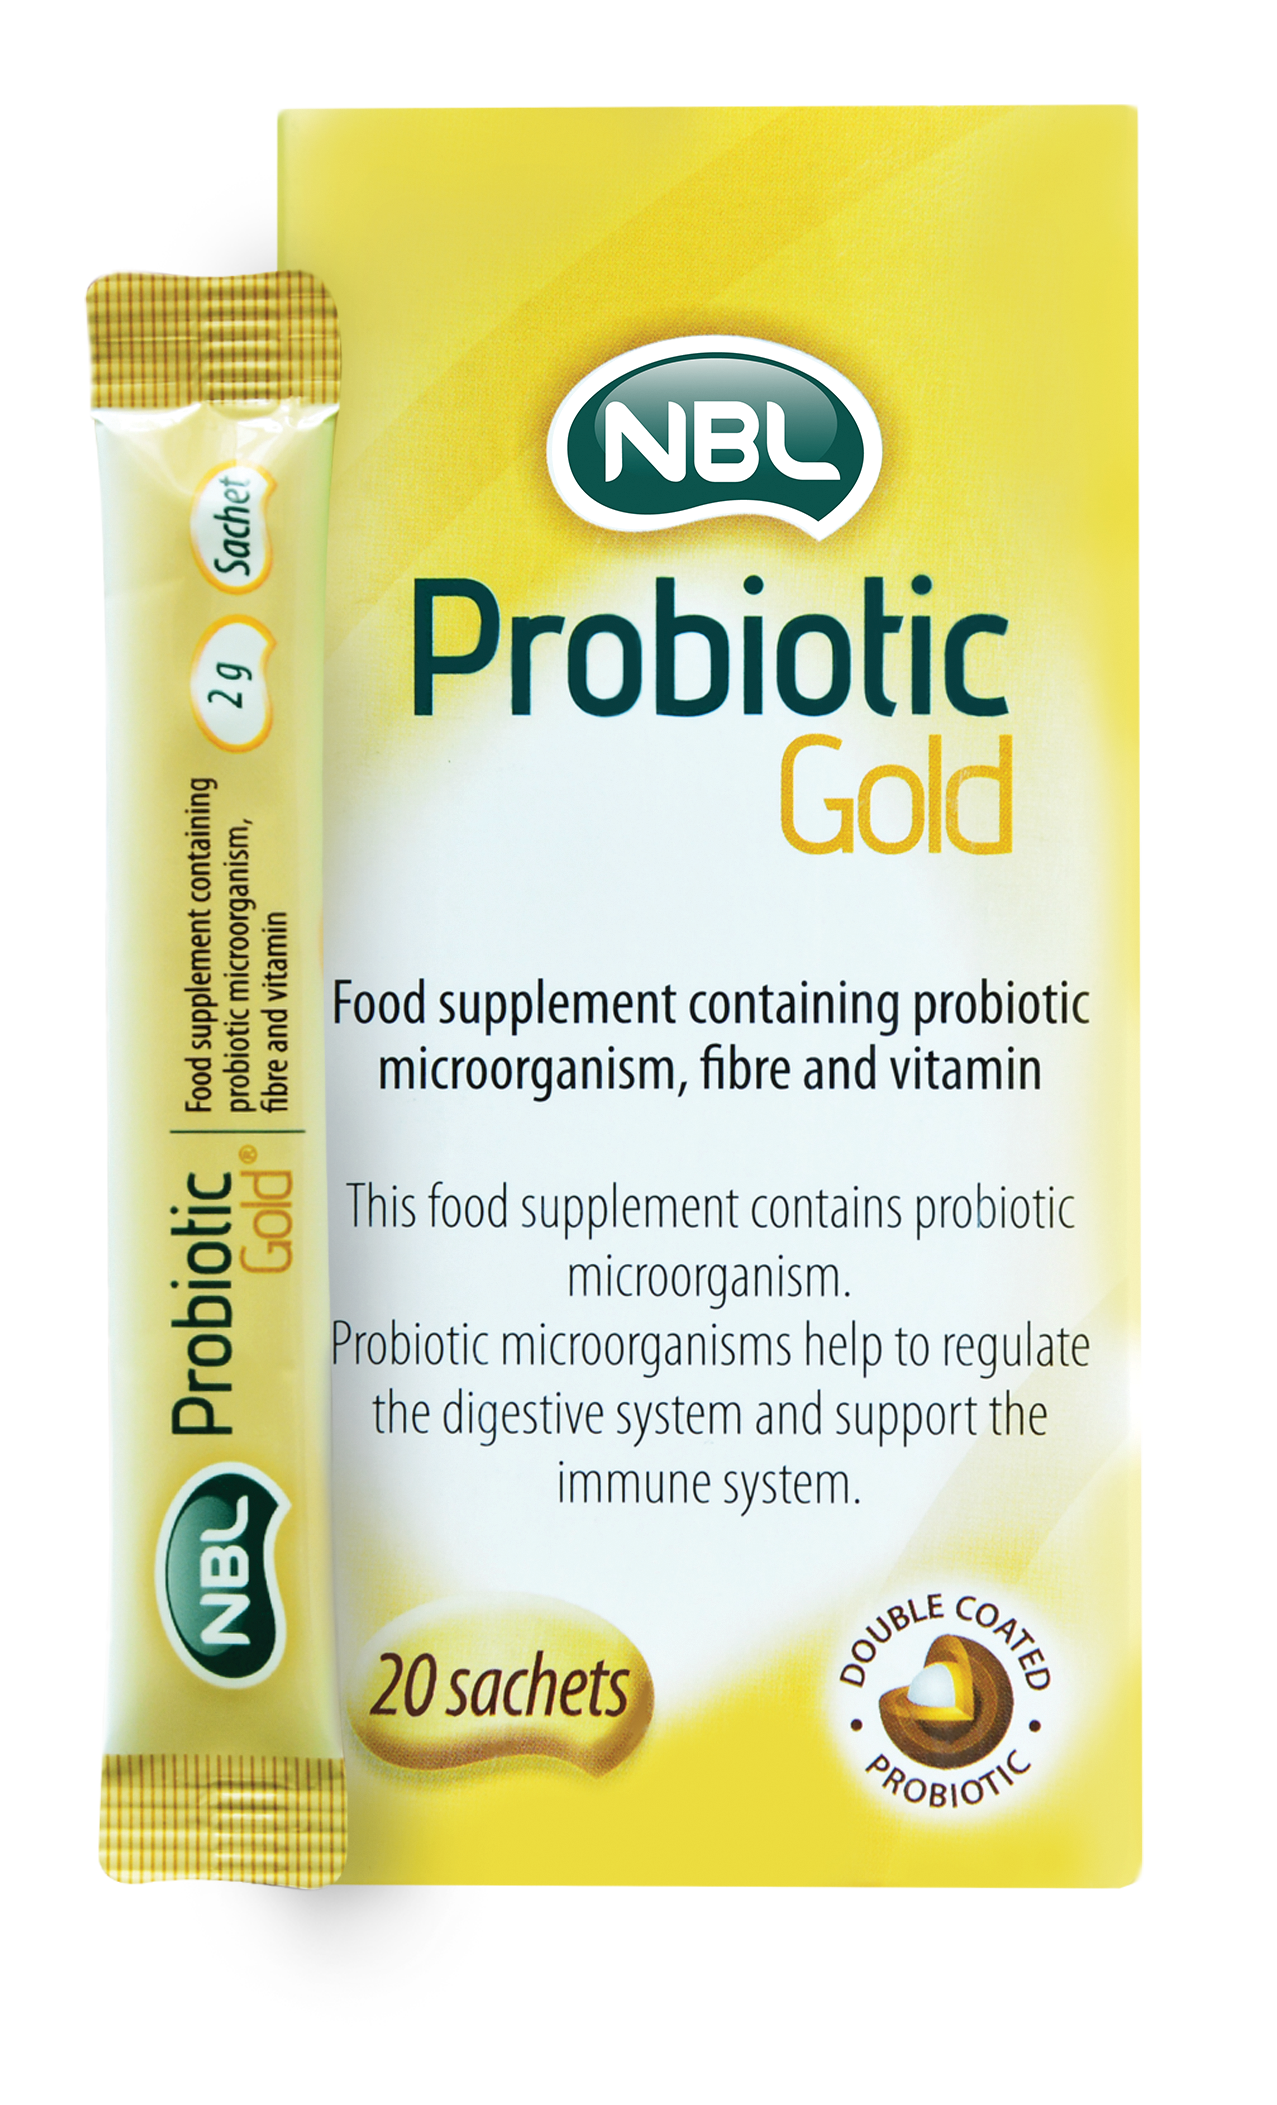 NBL პრობიოტიკი გოლდი / NBL Probiotic Goldi